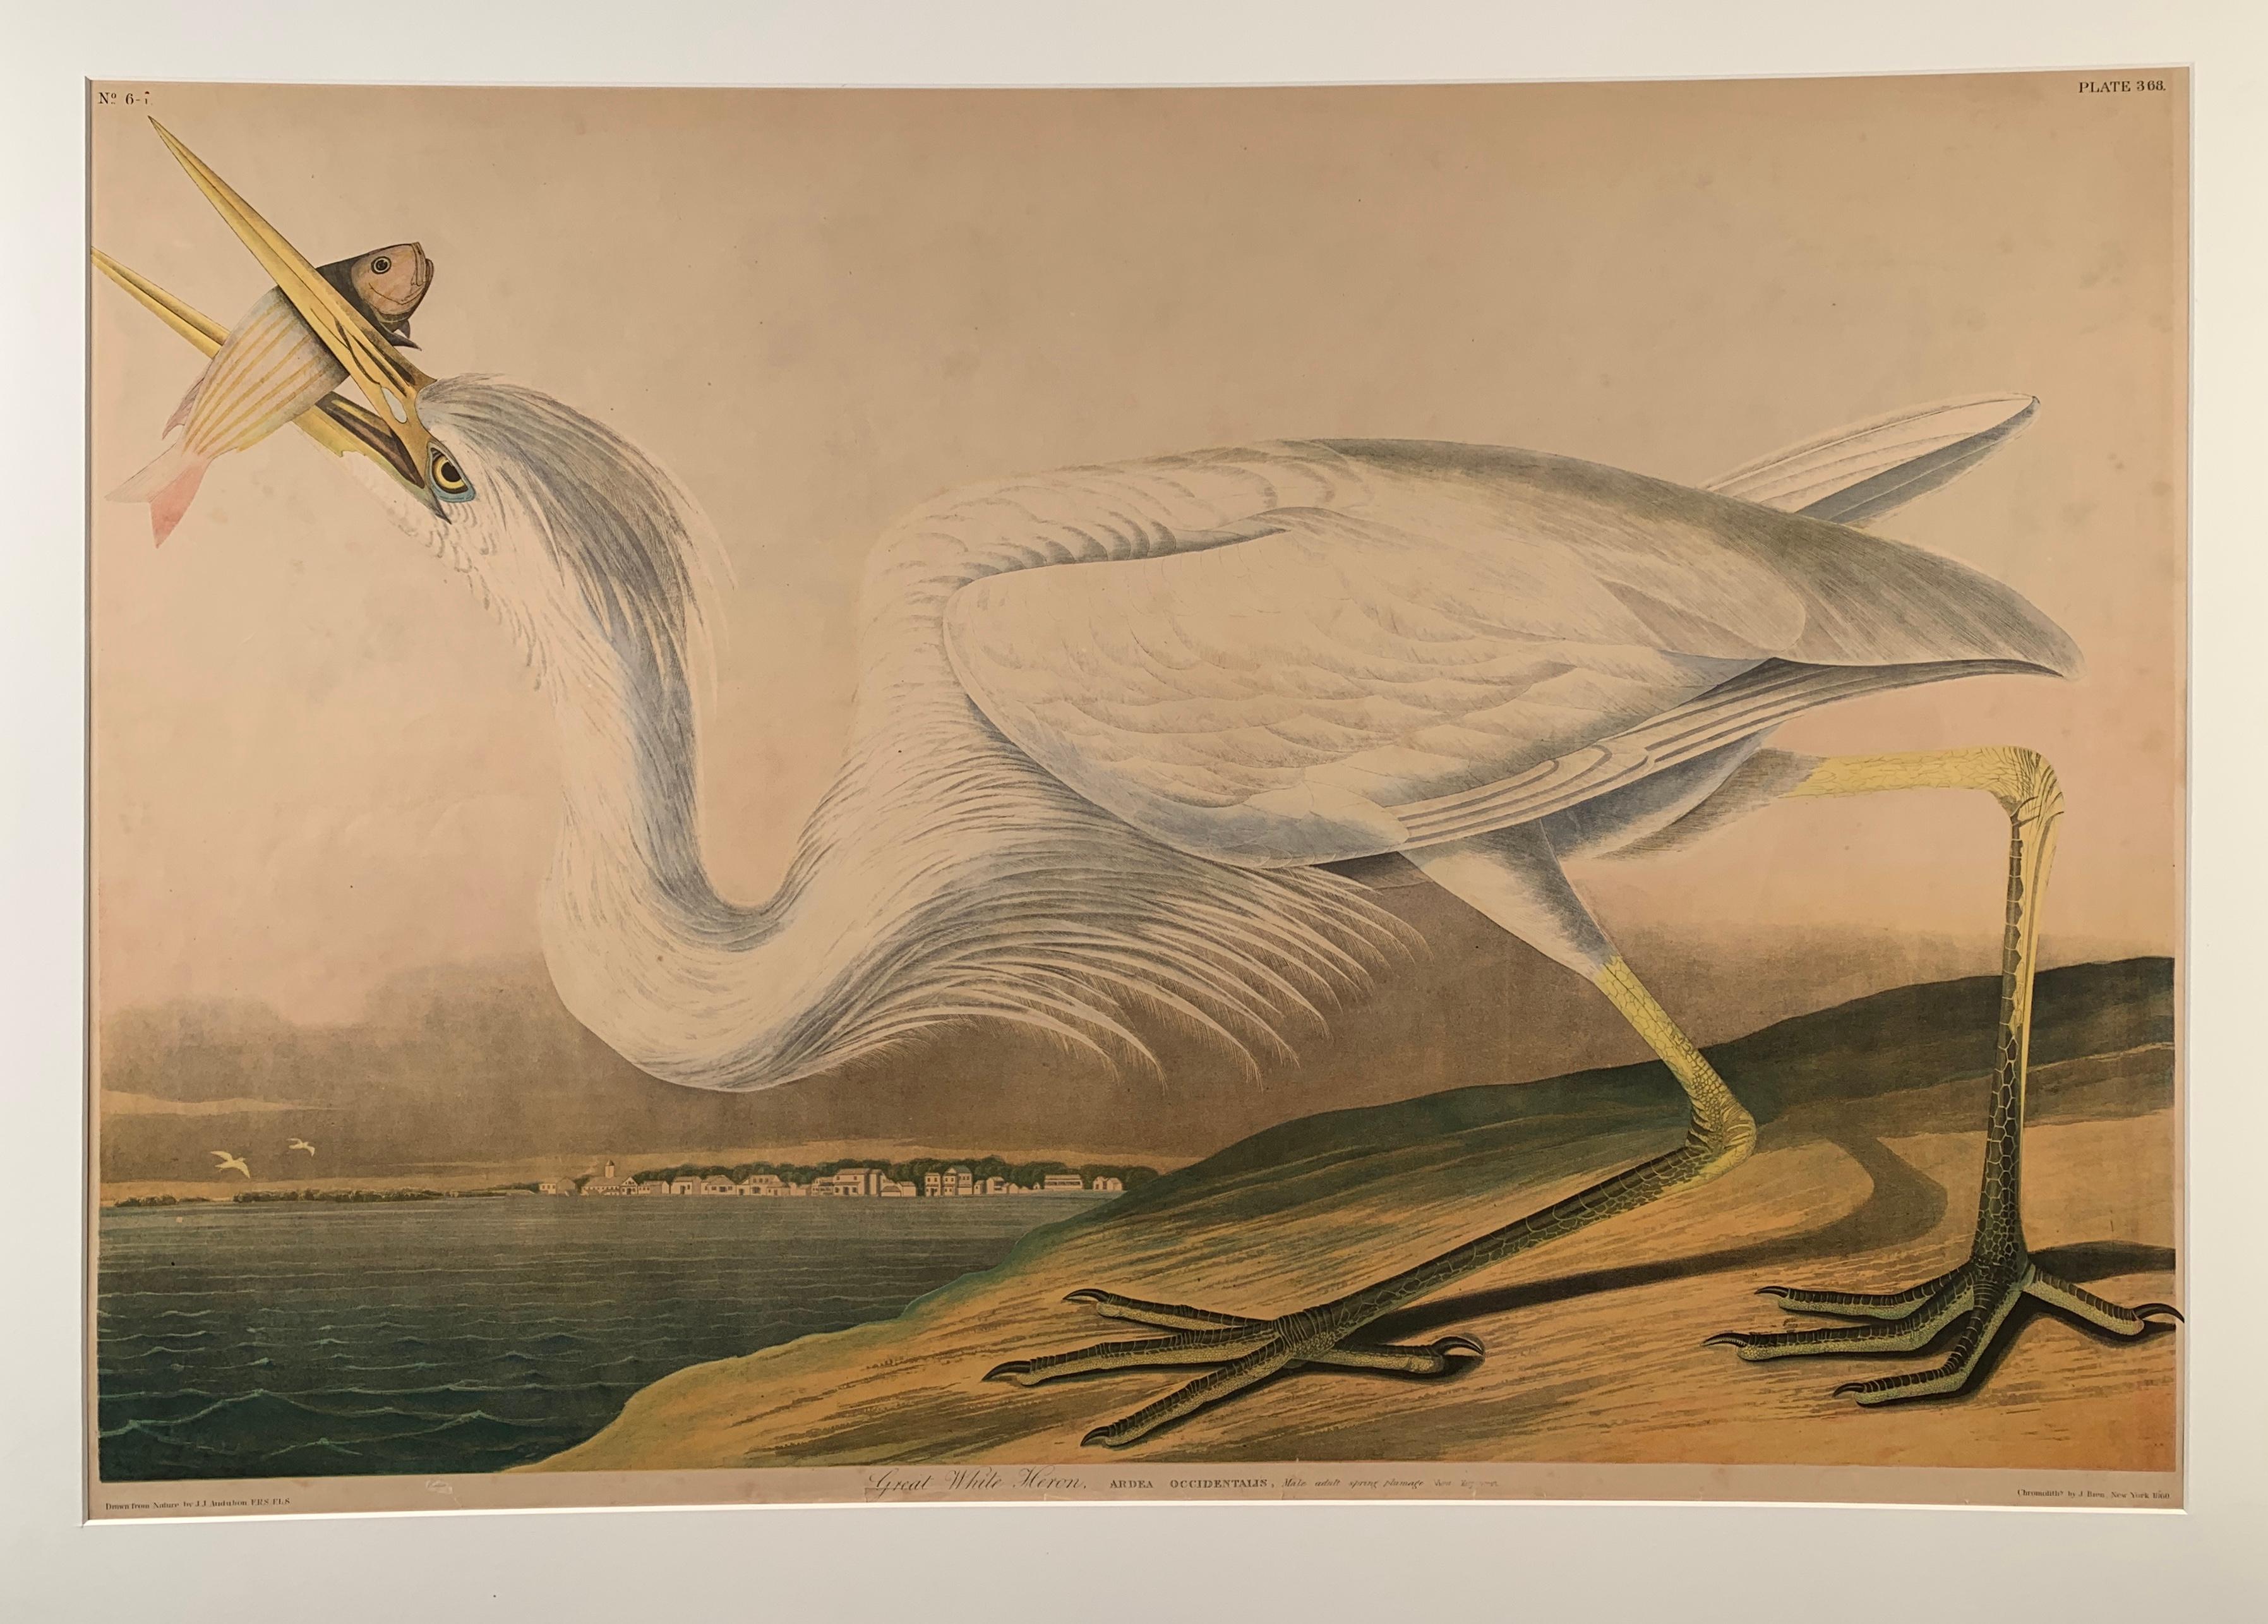 After John James Audubon Animal Print - "Great White Heron" After Audubon Chromolithograph, from the 1860 Bien Edition